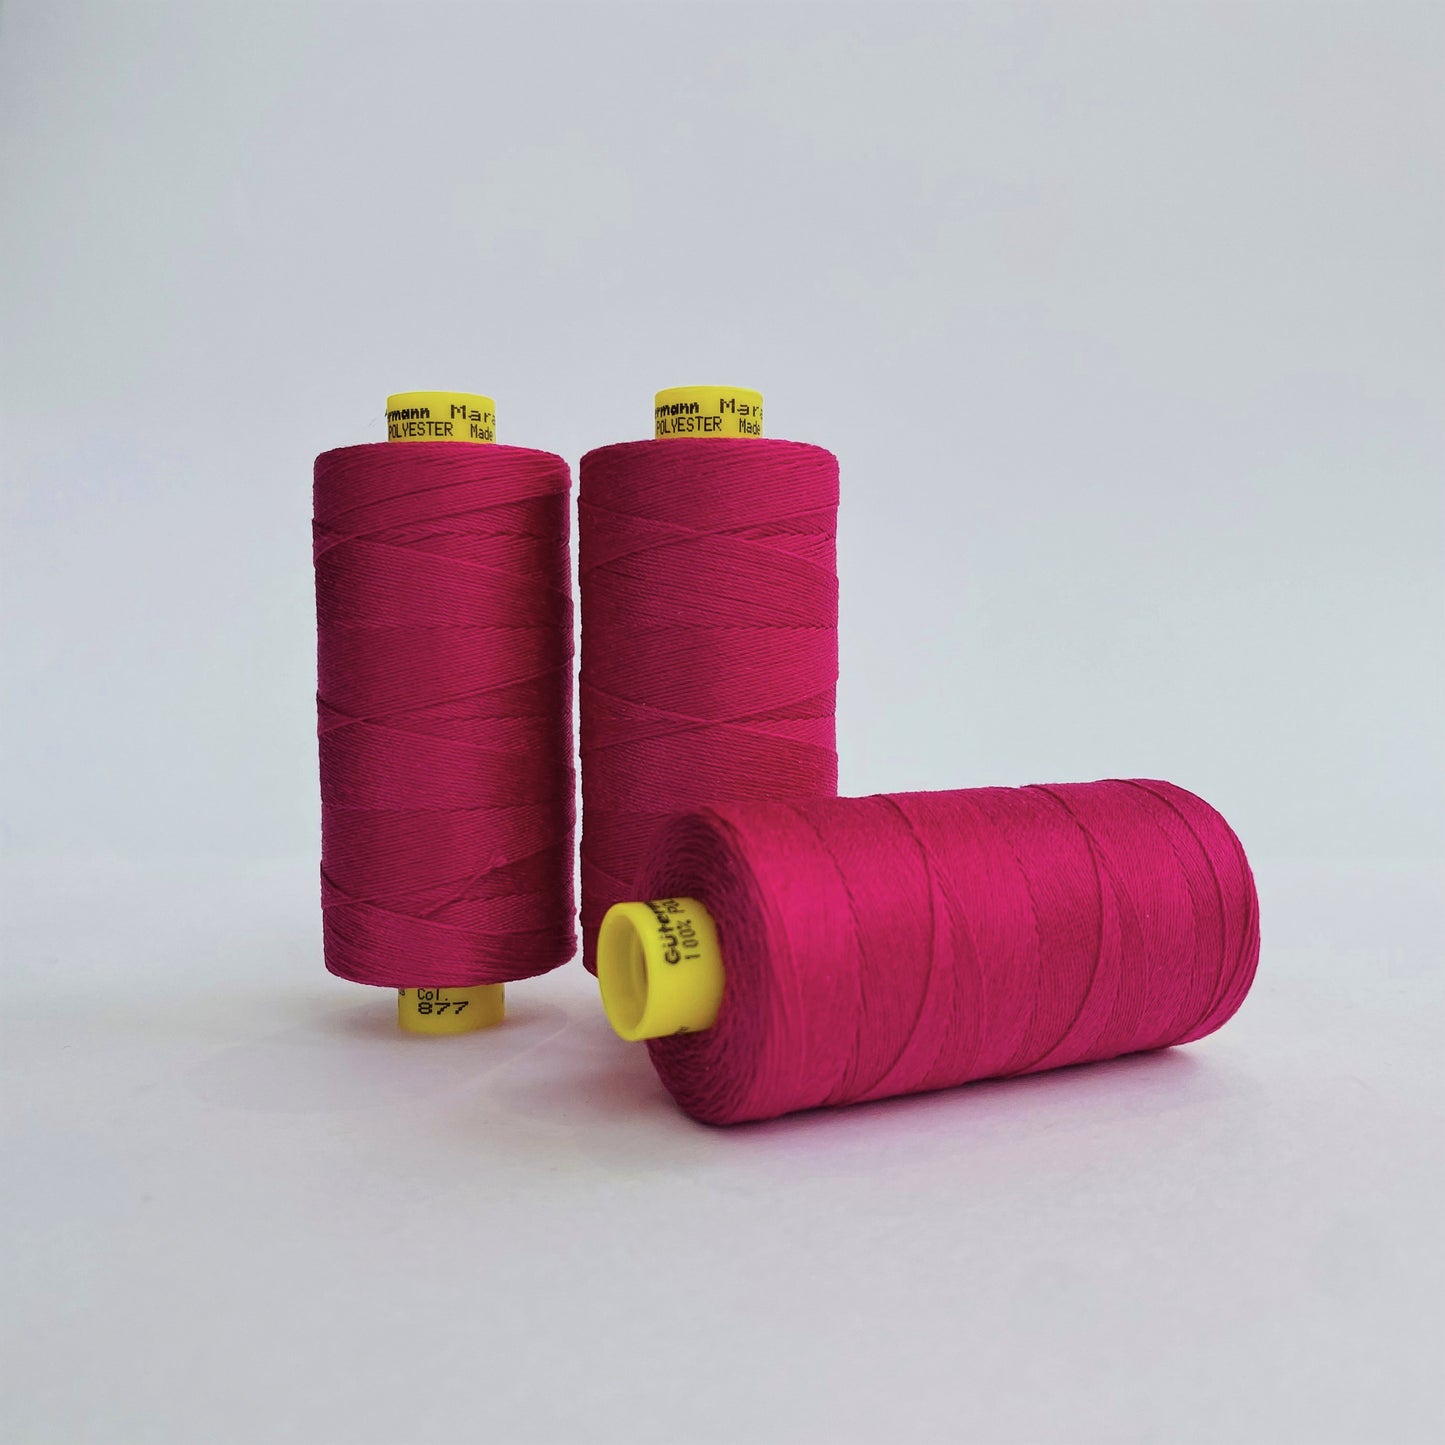 Gutermann Mara #30 Top-Stitch Sewing Thread 300m Spools Fuchsia 877 - Kleins Haberdashery